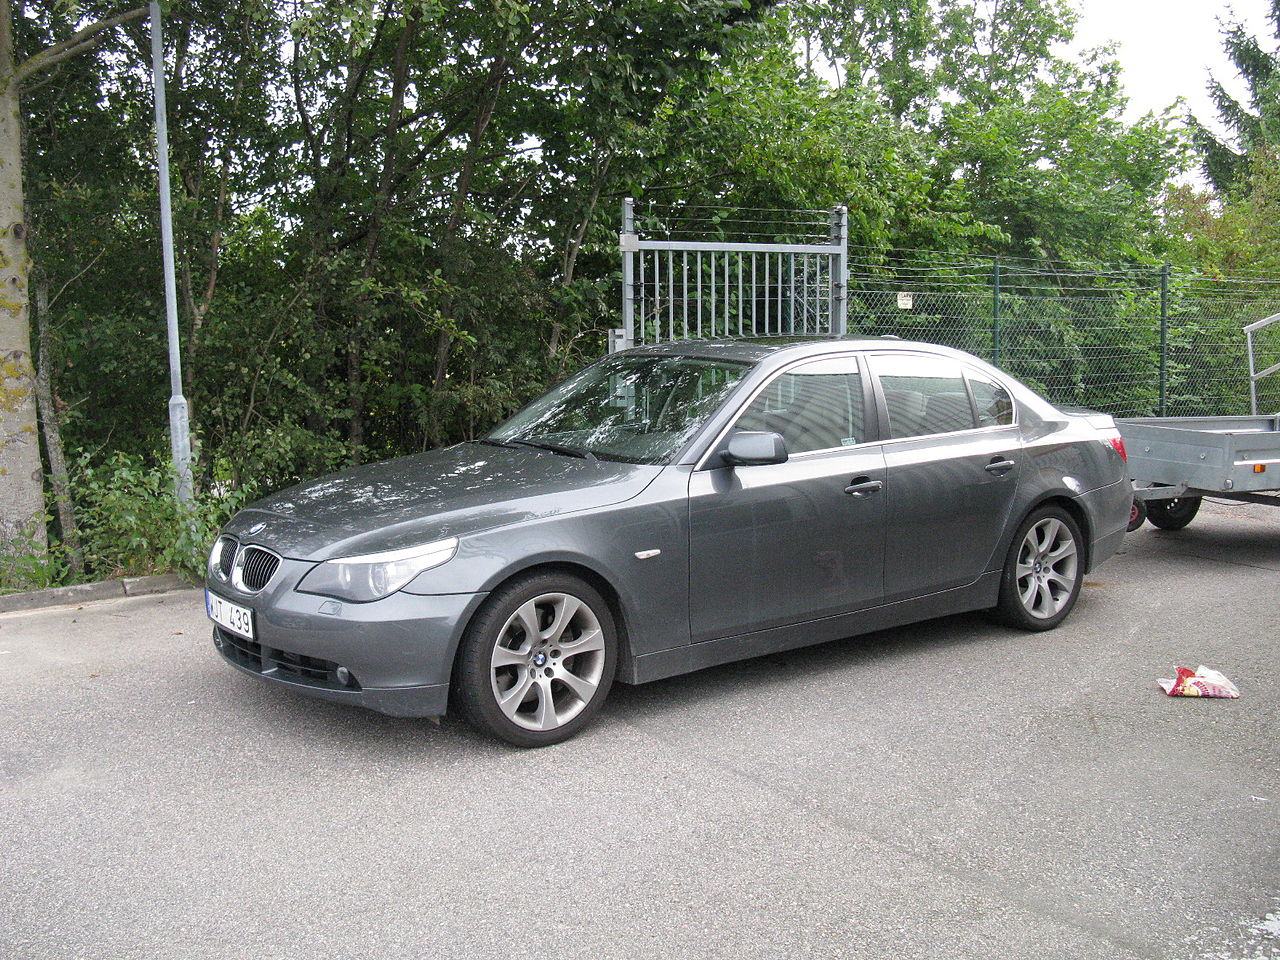 File:BMW-5series-E60.jpg - Wikipedia